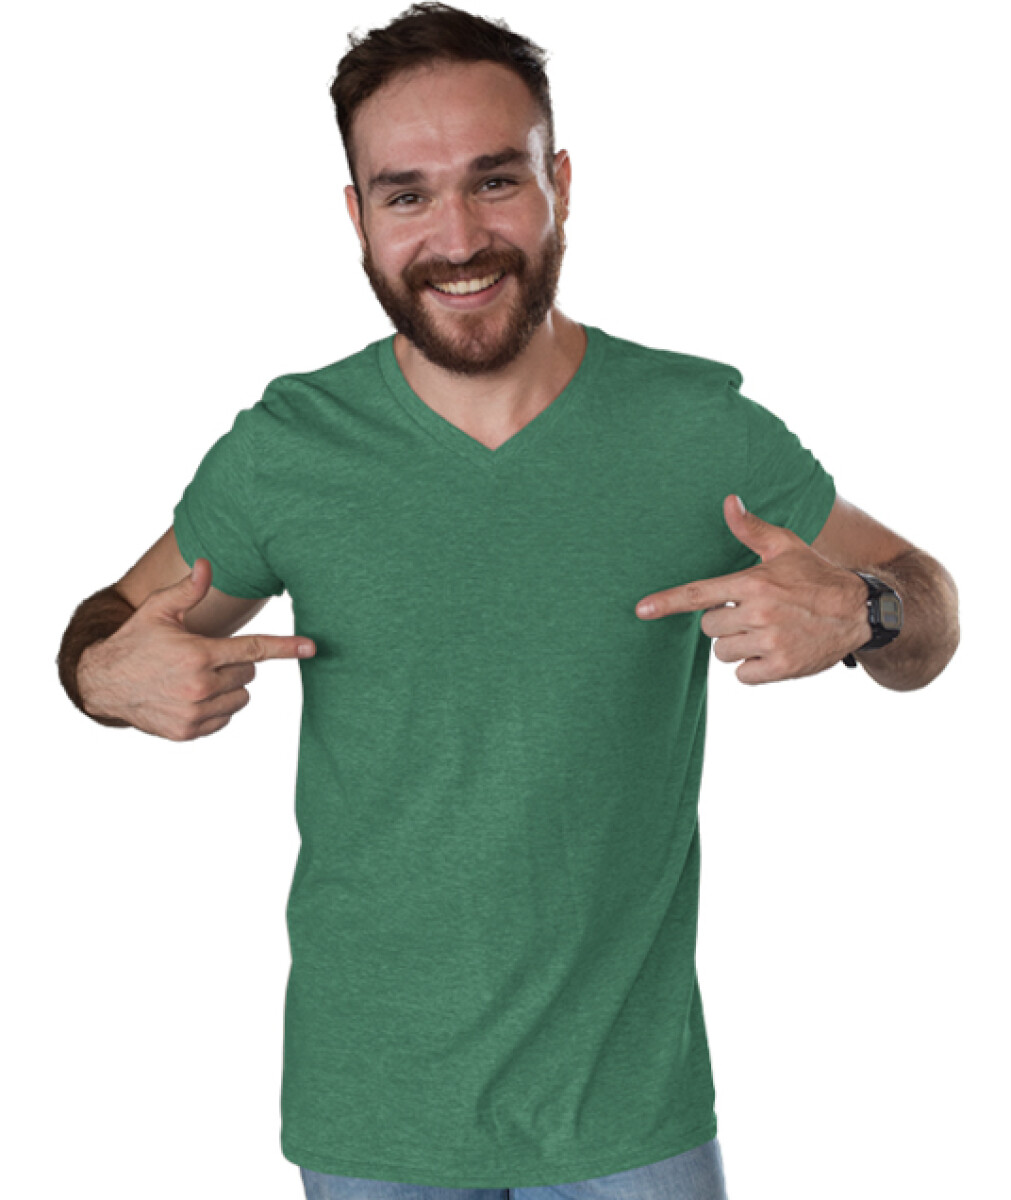 Camiseta jaspe escote en v - Verde jade 